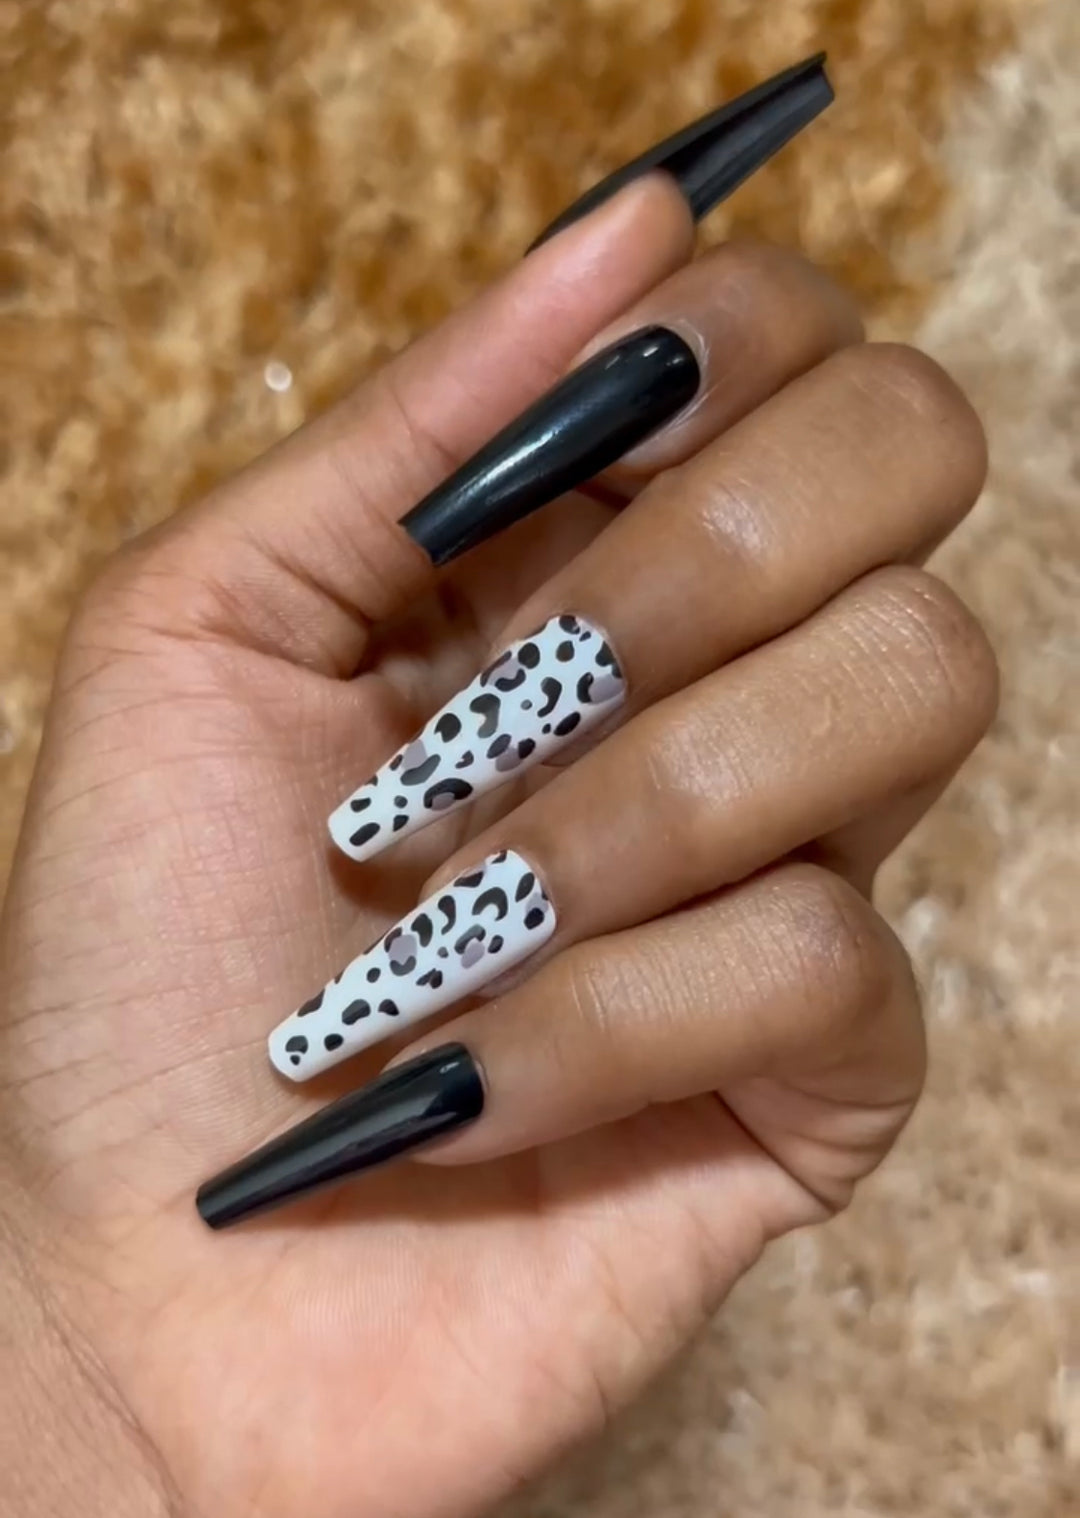 XL Cheetah Print Press On Nails